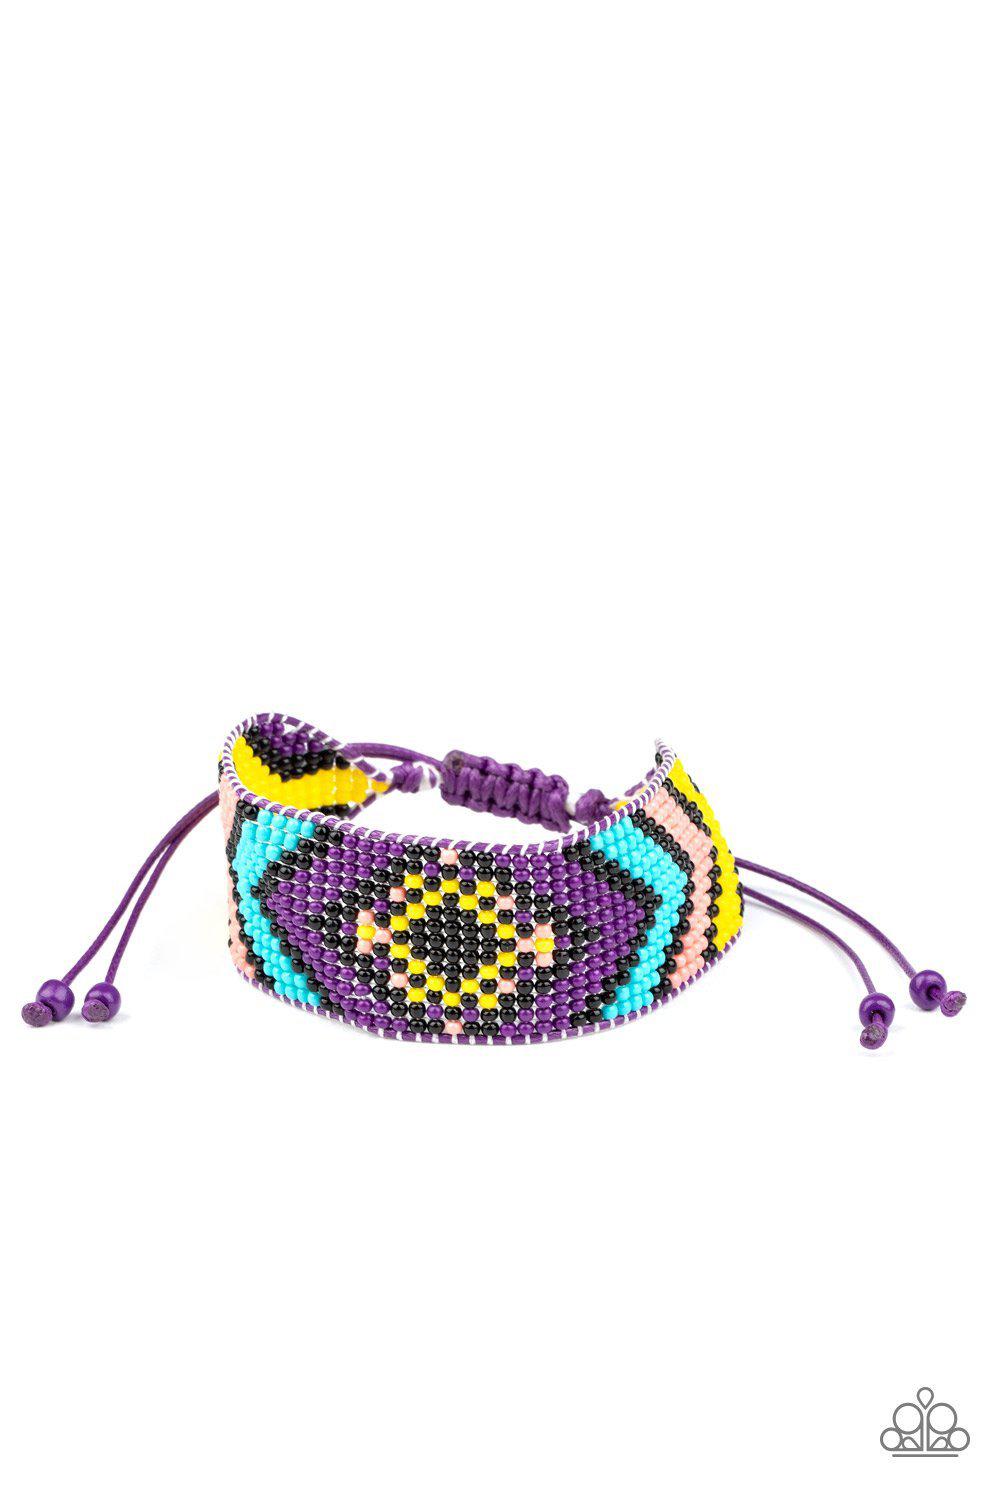 Desert Dive Purple Seed Bead Urban Sliding Knot Bracelet - Paparazzi Accessories- lightbox - CarasShop.com - $5 Jewelry by Cara Jewels